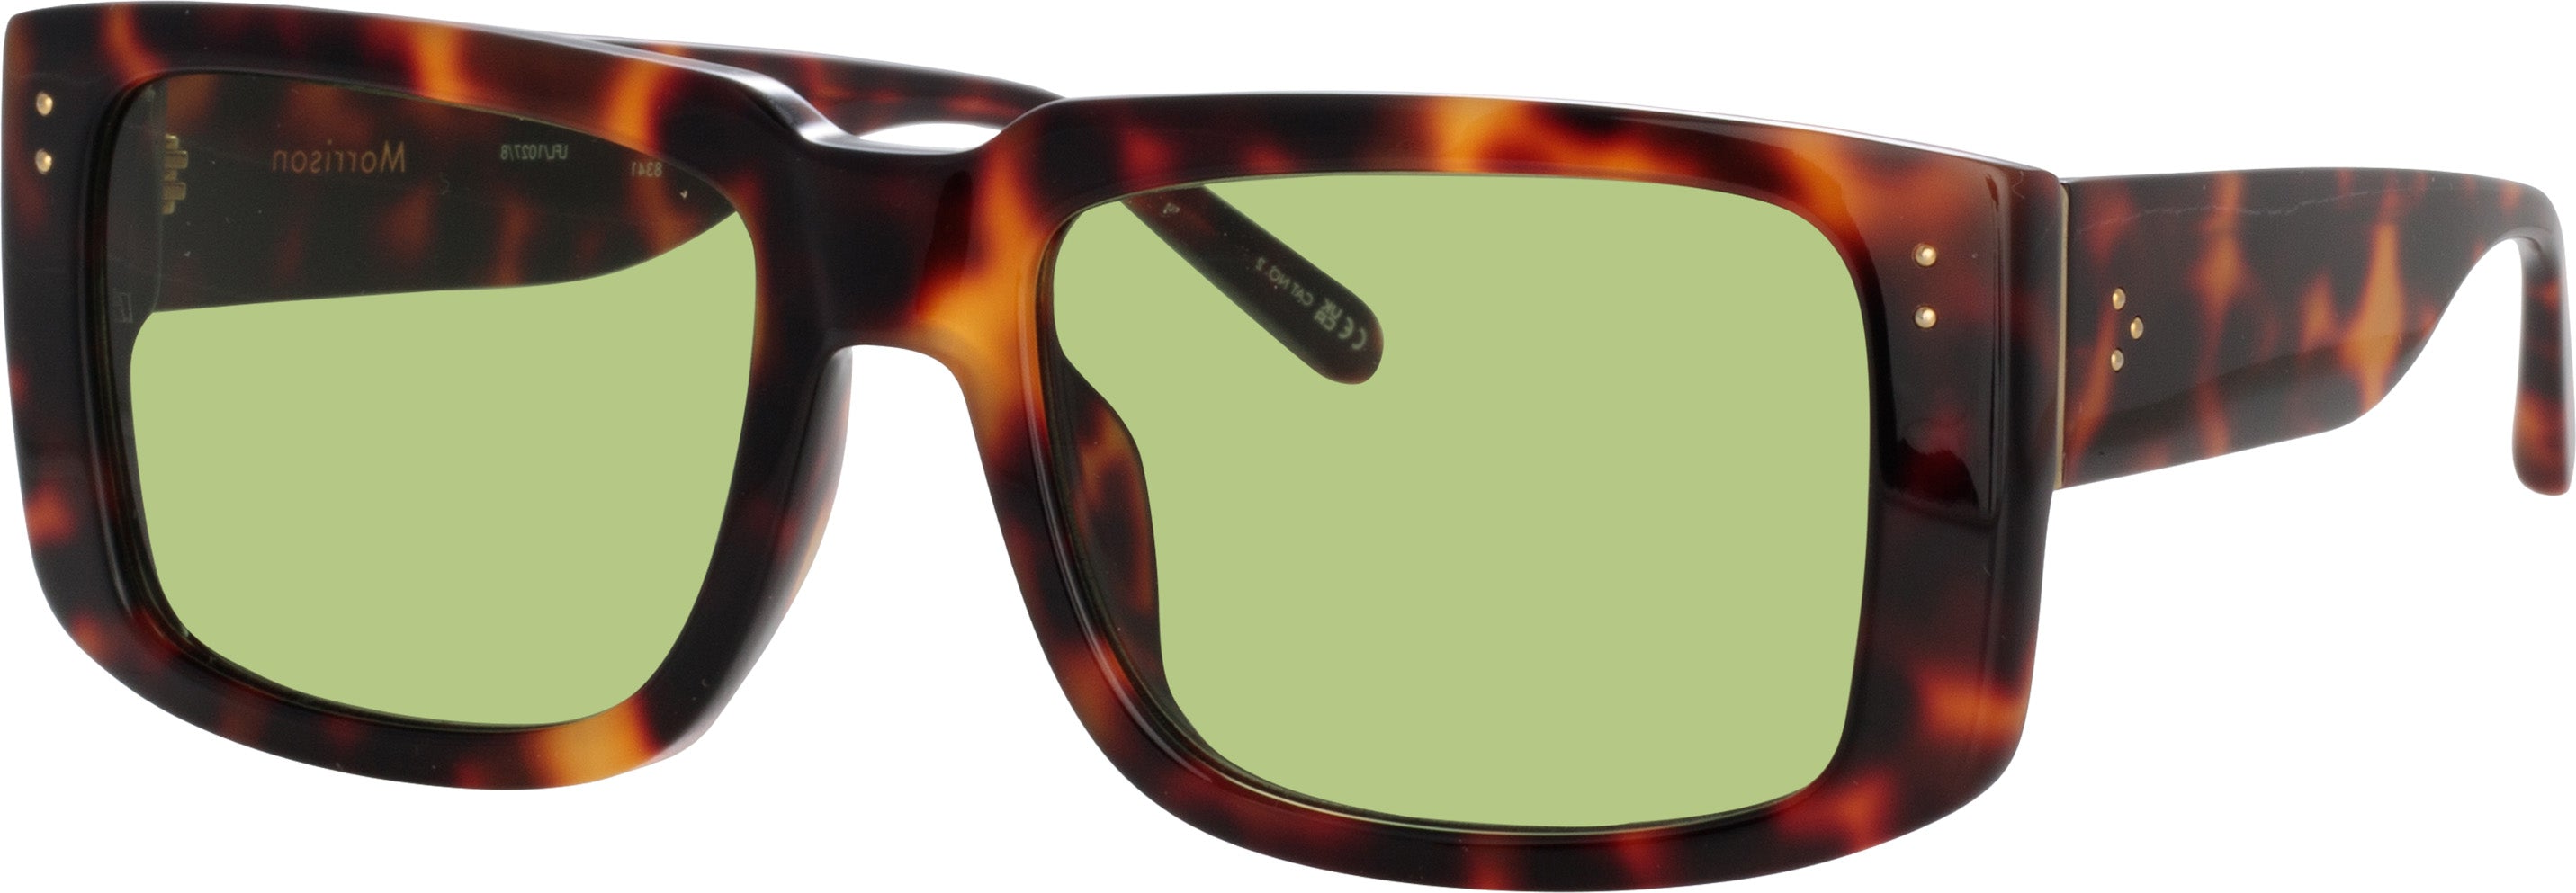 Color_LFL1027C8SUN - Morrison Rectangular Sunglasses in Tortoiseshell and Green